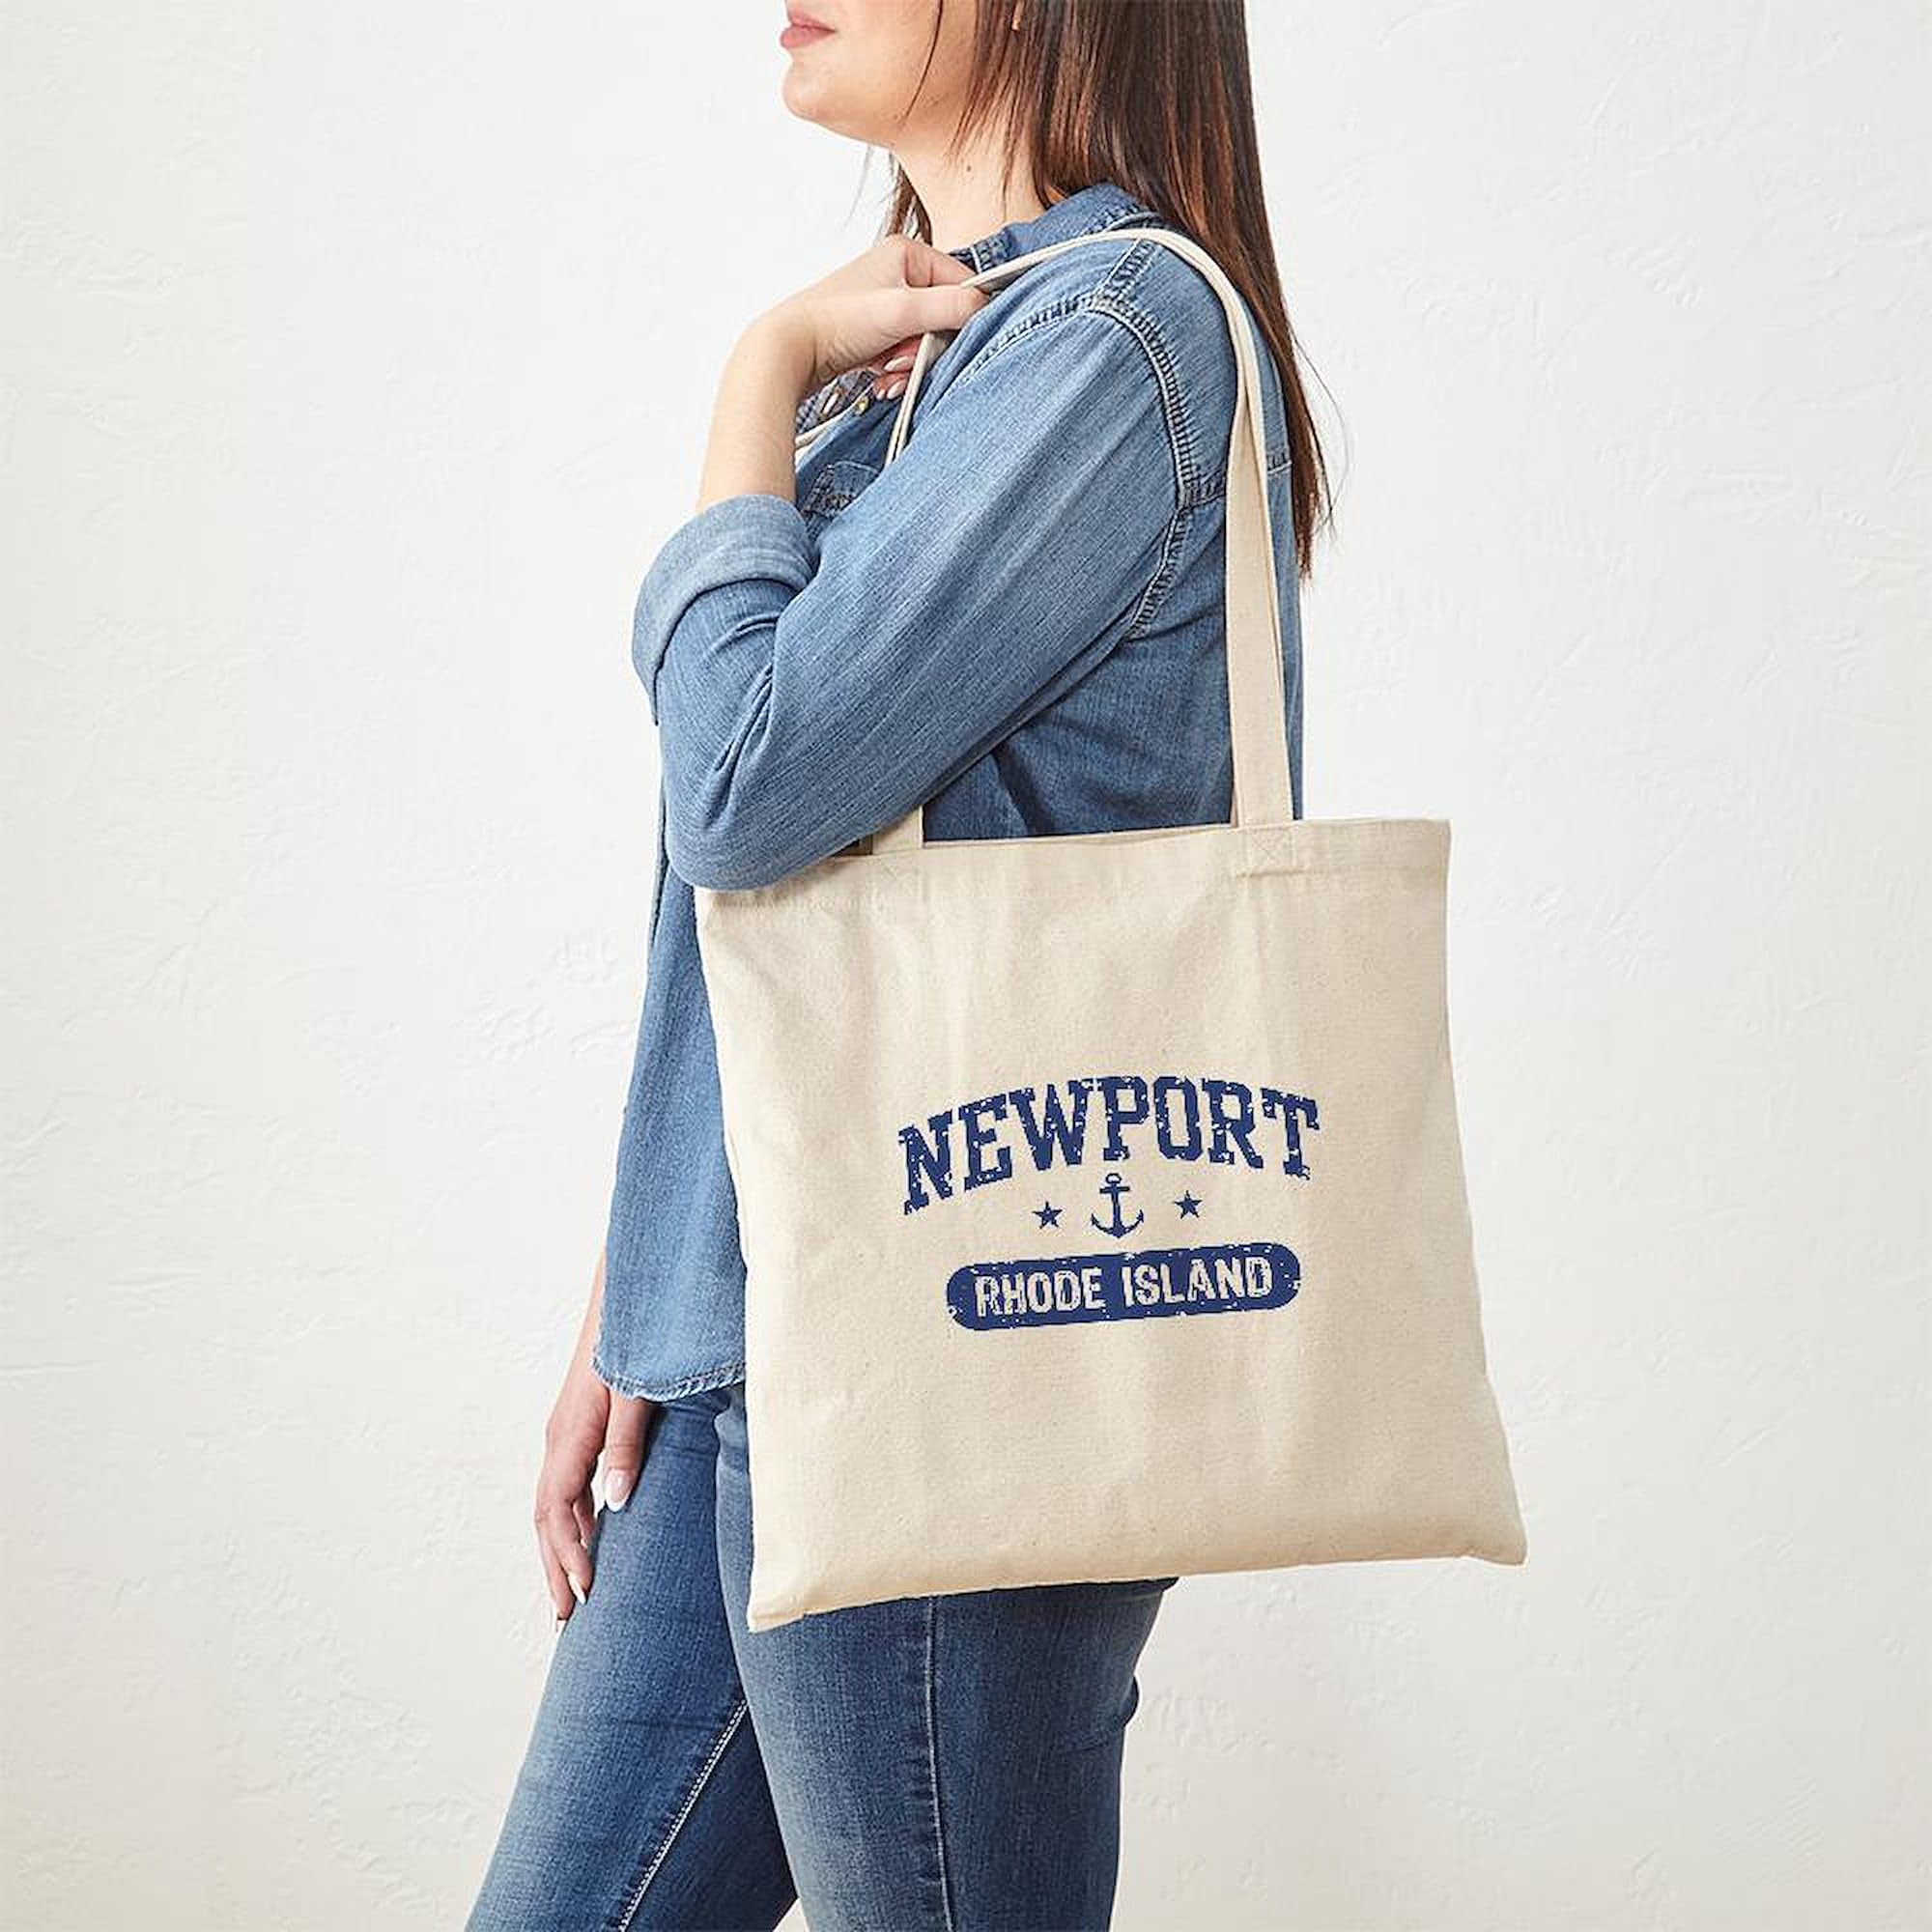 CafePress Newport Rhode Island Tote Bag Canvas Tote Shopping Bag